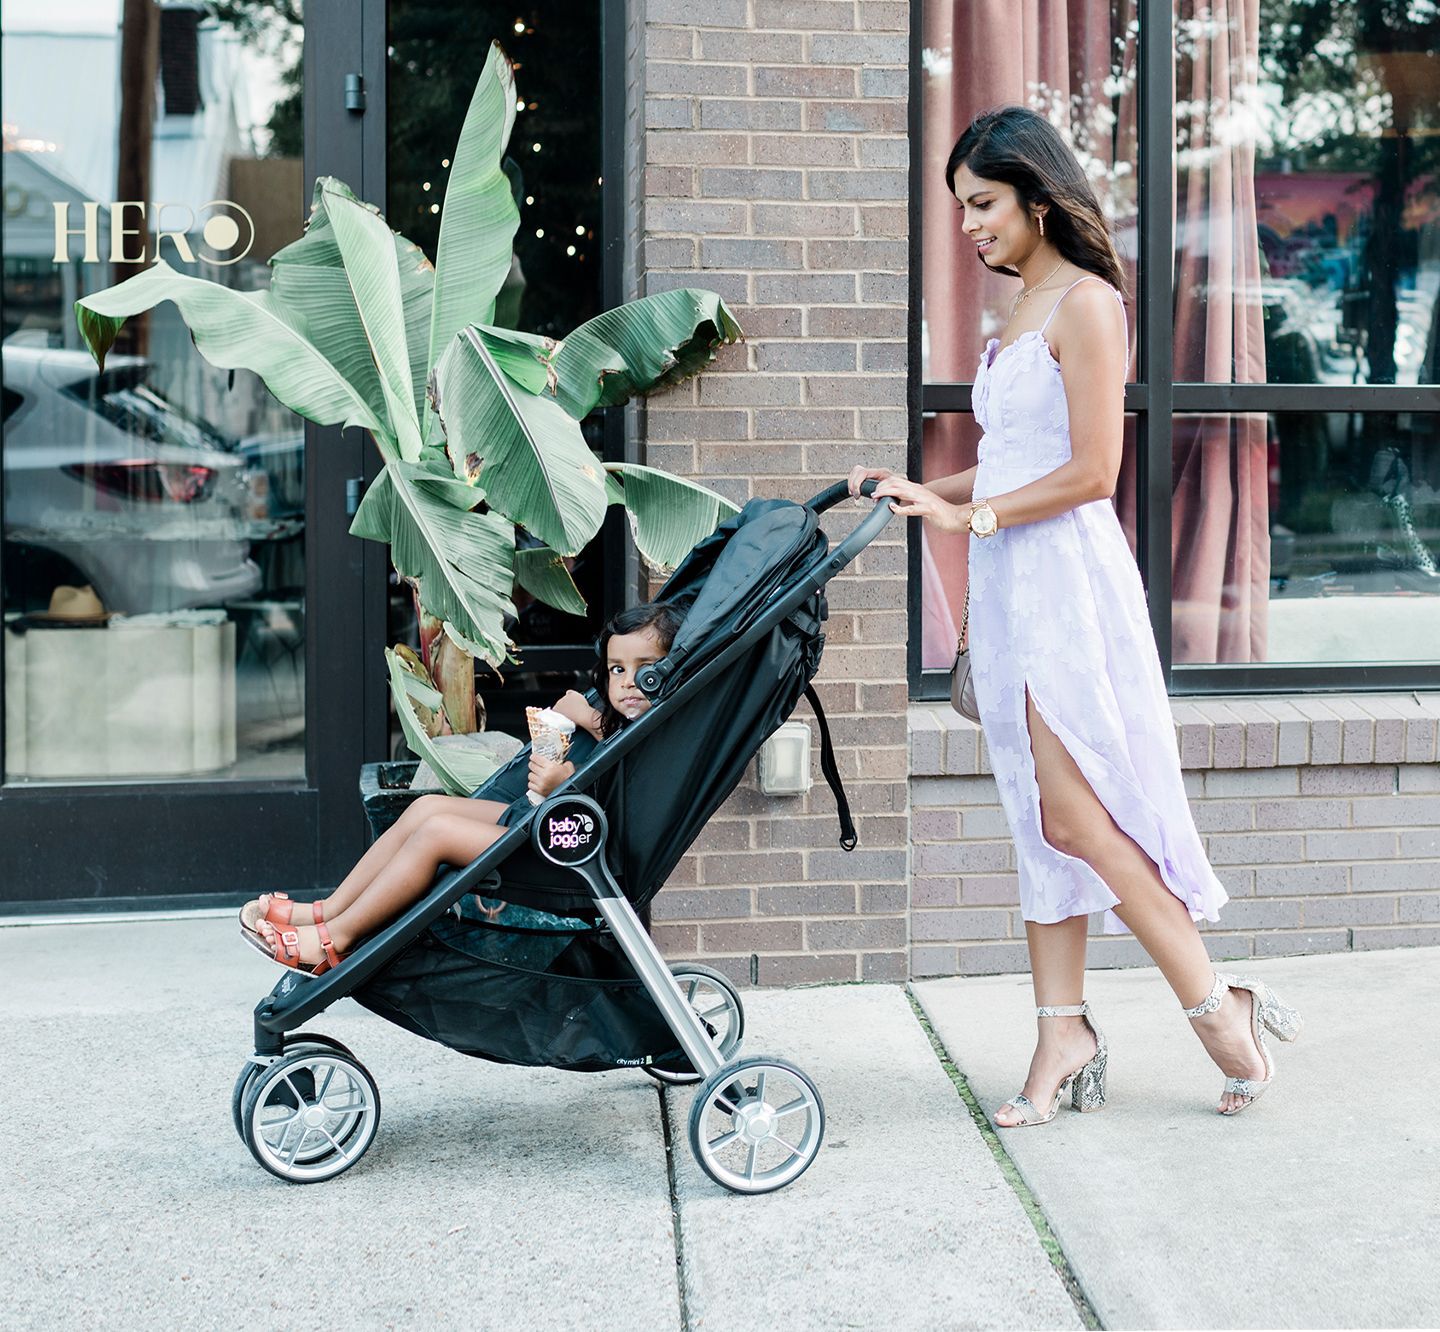 baby shop stroller